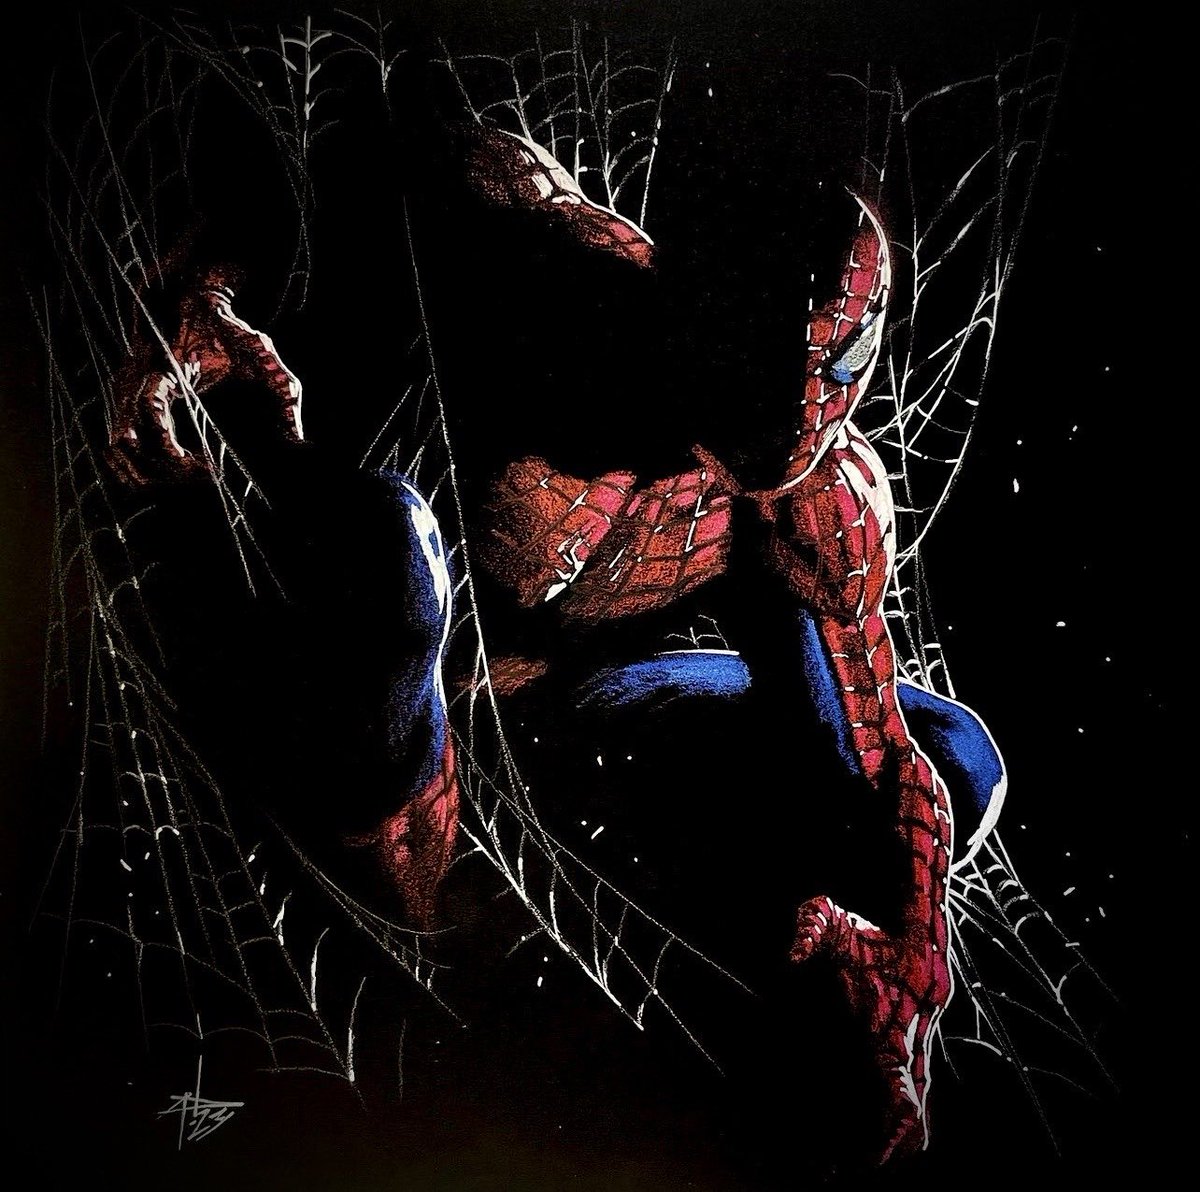 The Amazing Spider-Man Artwork by Gabriele Dell'Otto #SpiderMan